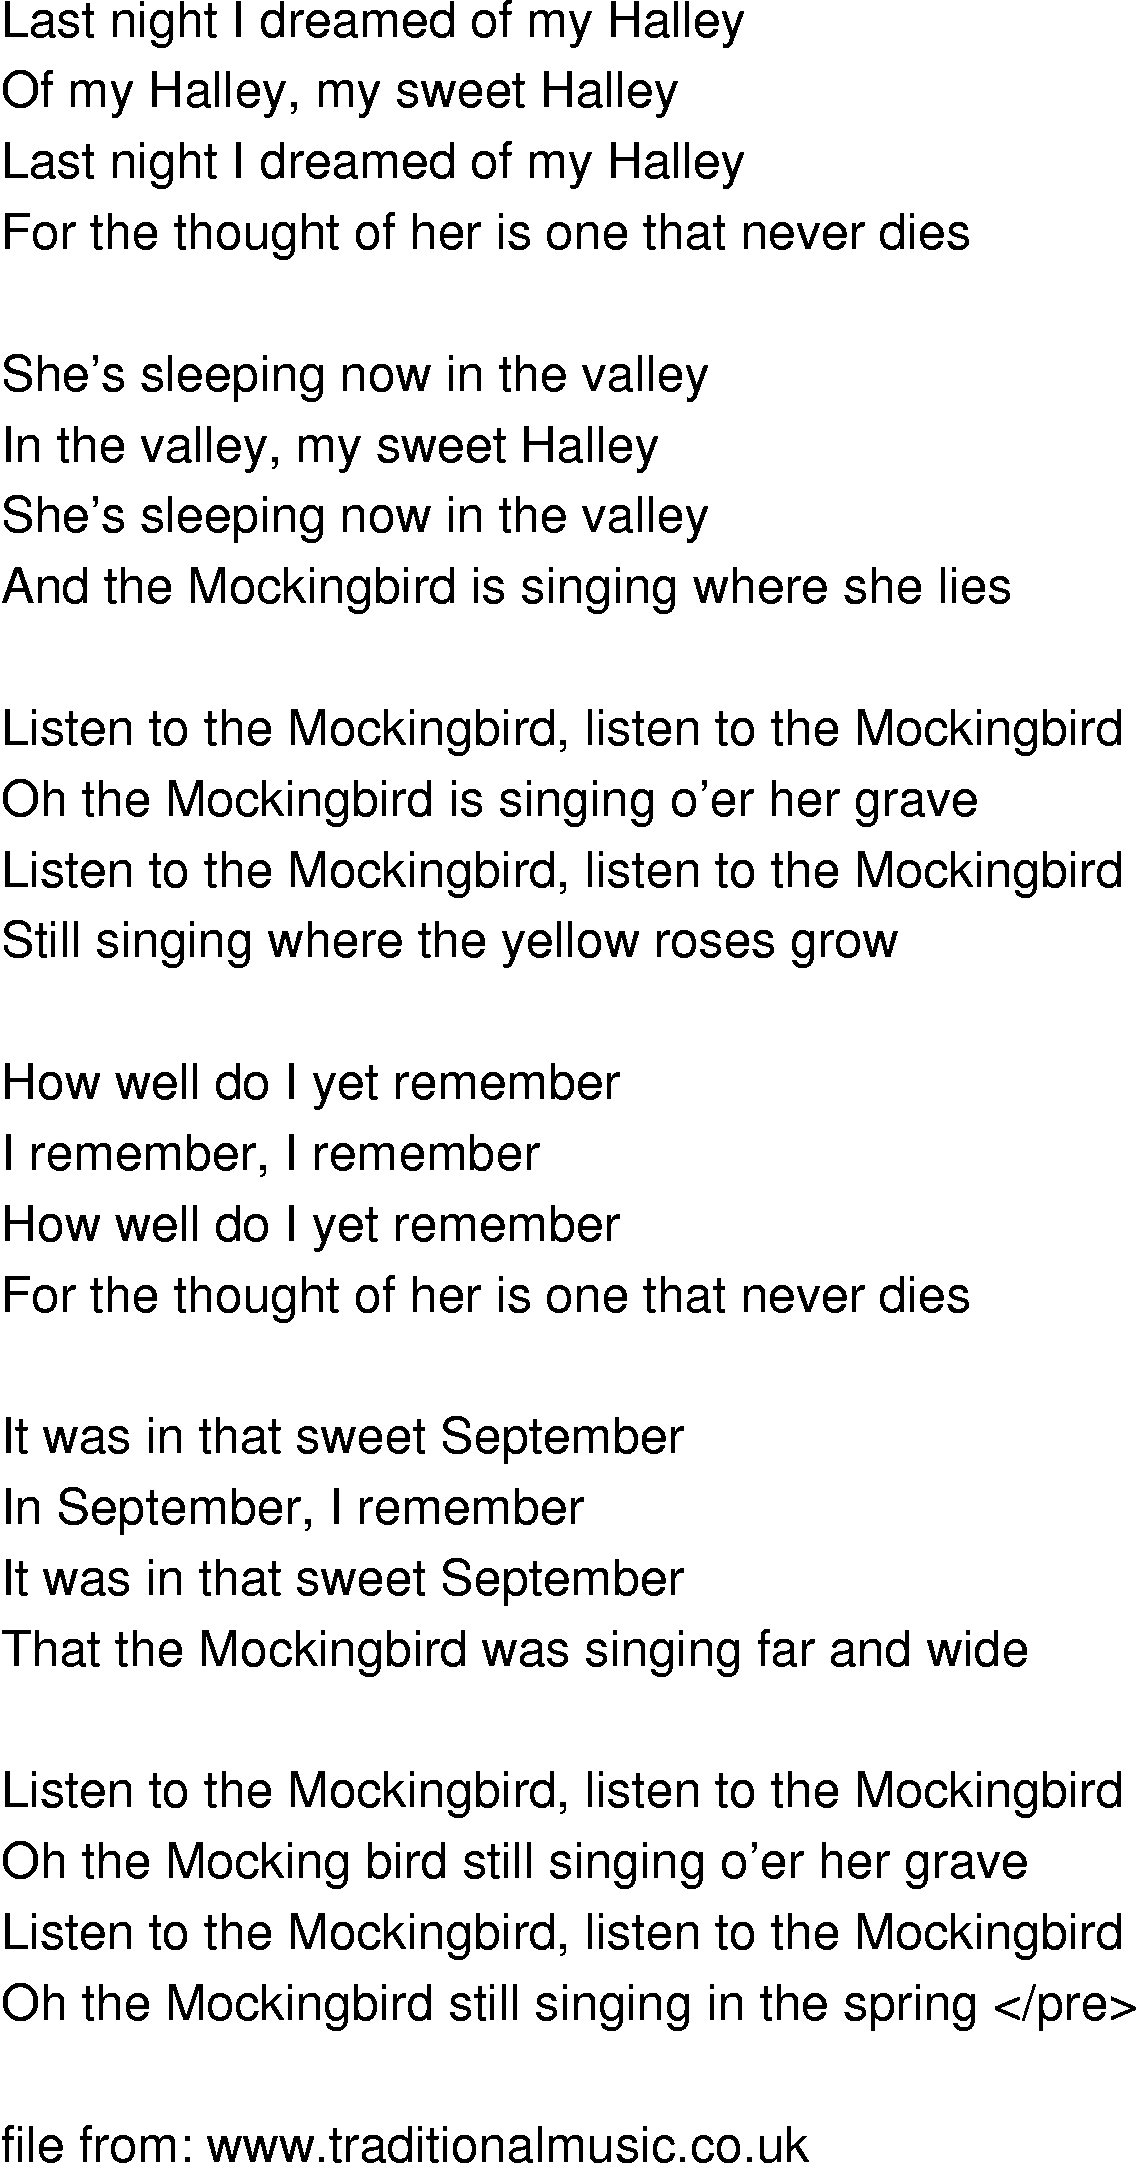 Mockingbird (Sped Up Version) (Remix) Lyrics